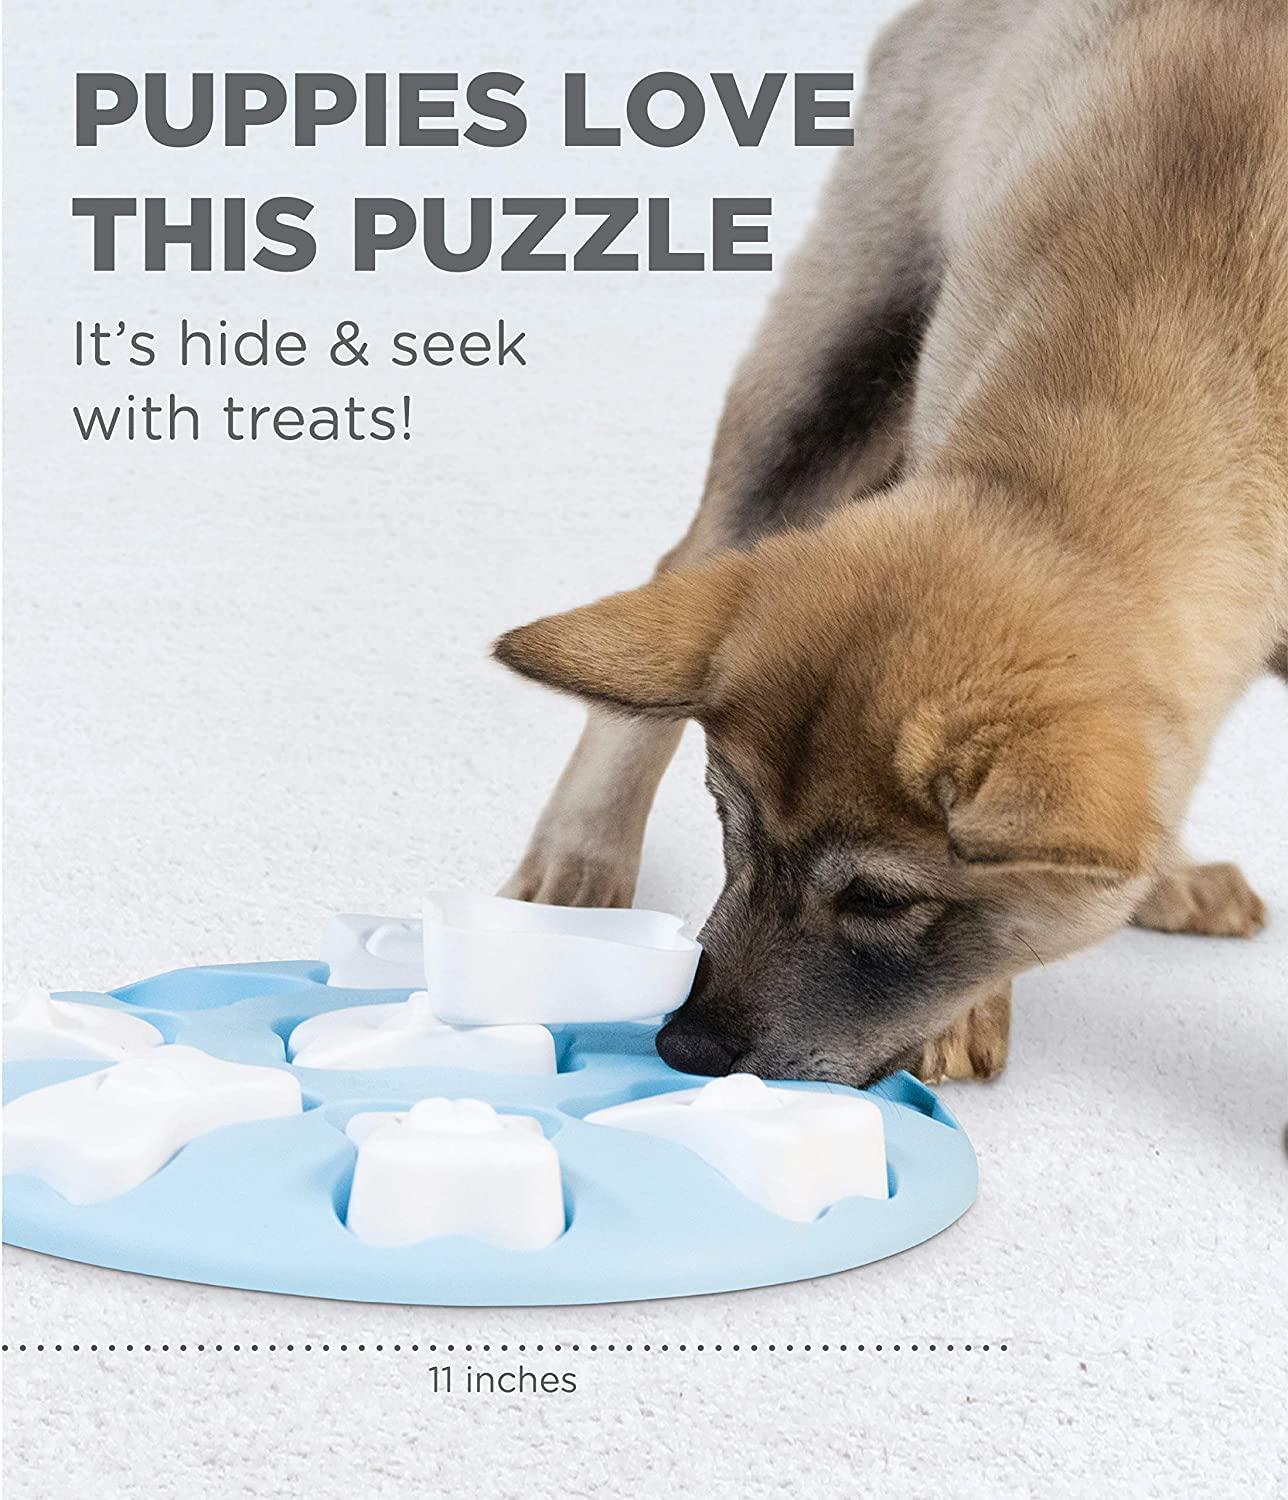 Nina Ottosson Puppy Hide N' Slide Interactive Treat Puzzle Dog Toy